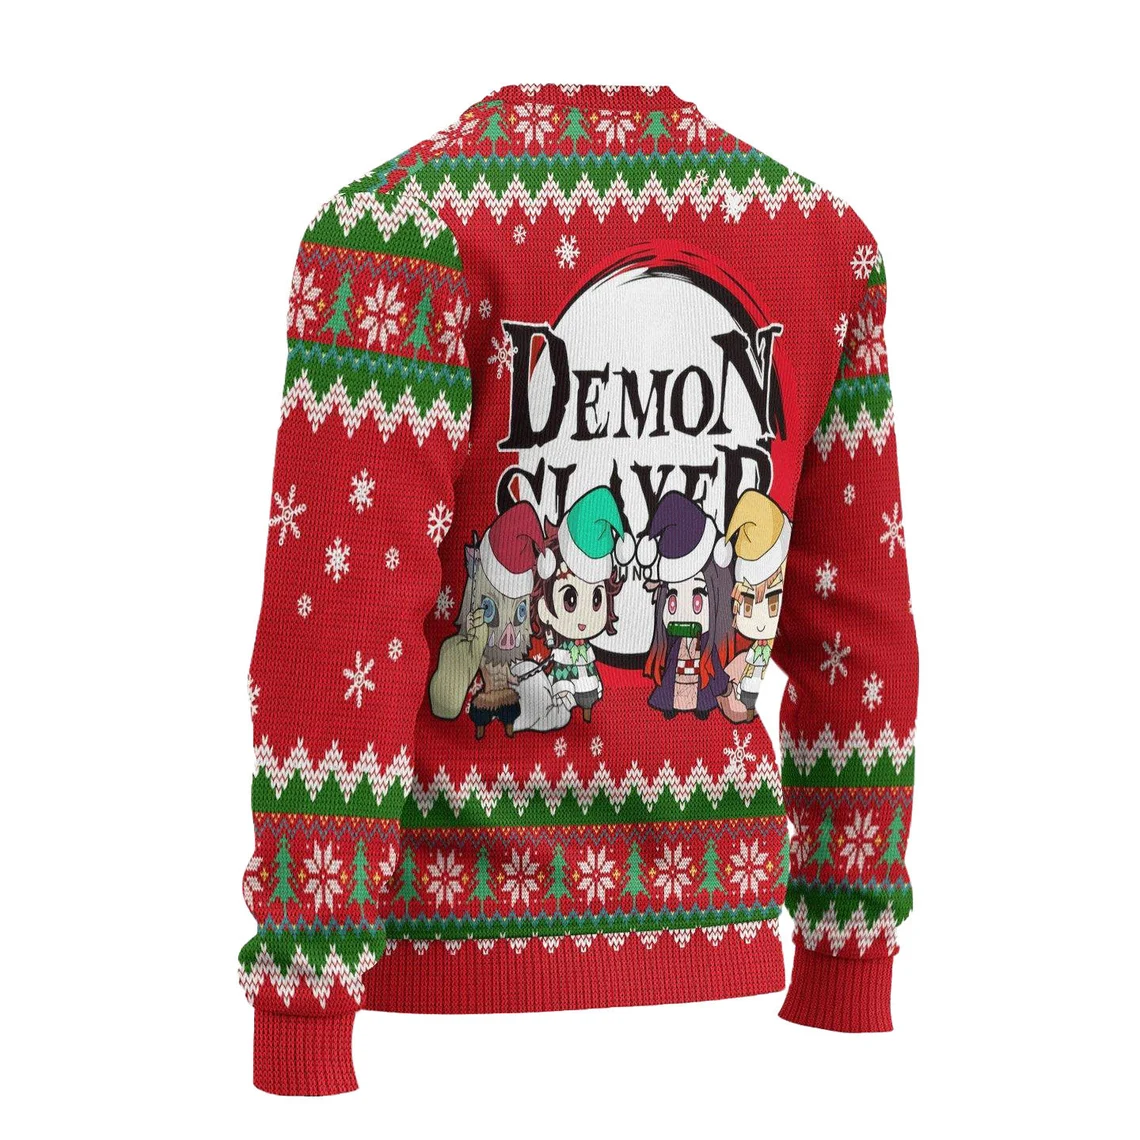 Demon Slayer Anime Ugly Knitted Christmas Sweater